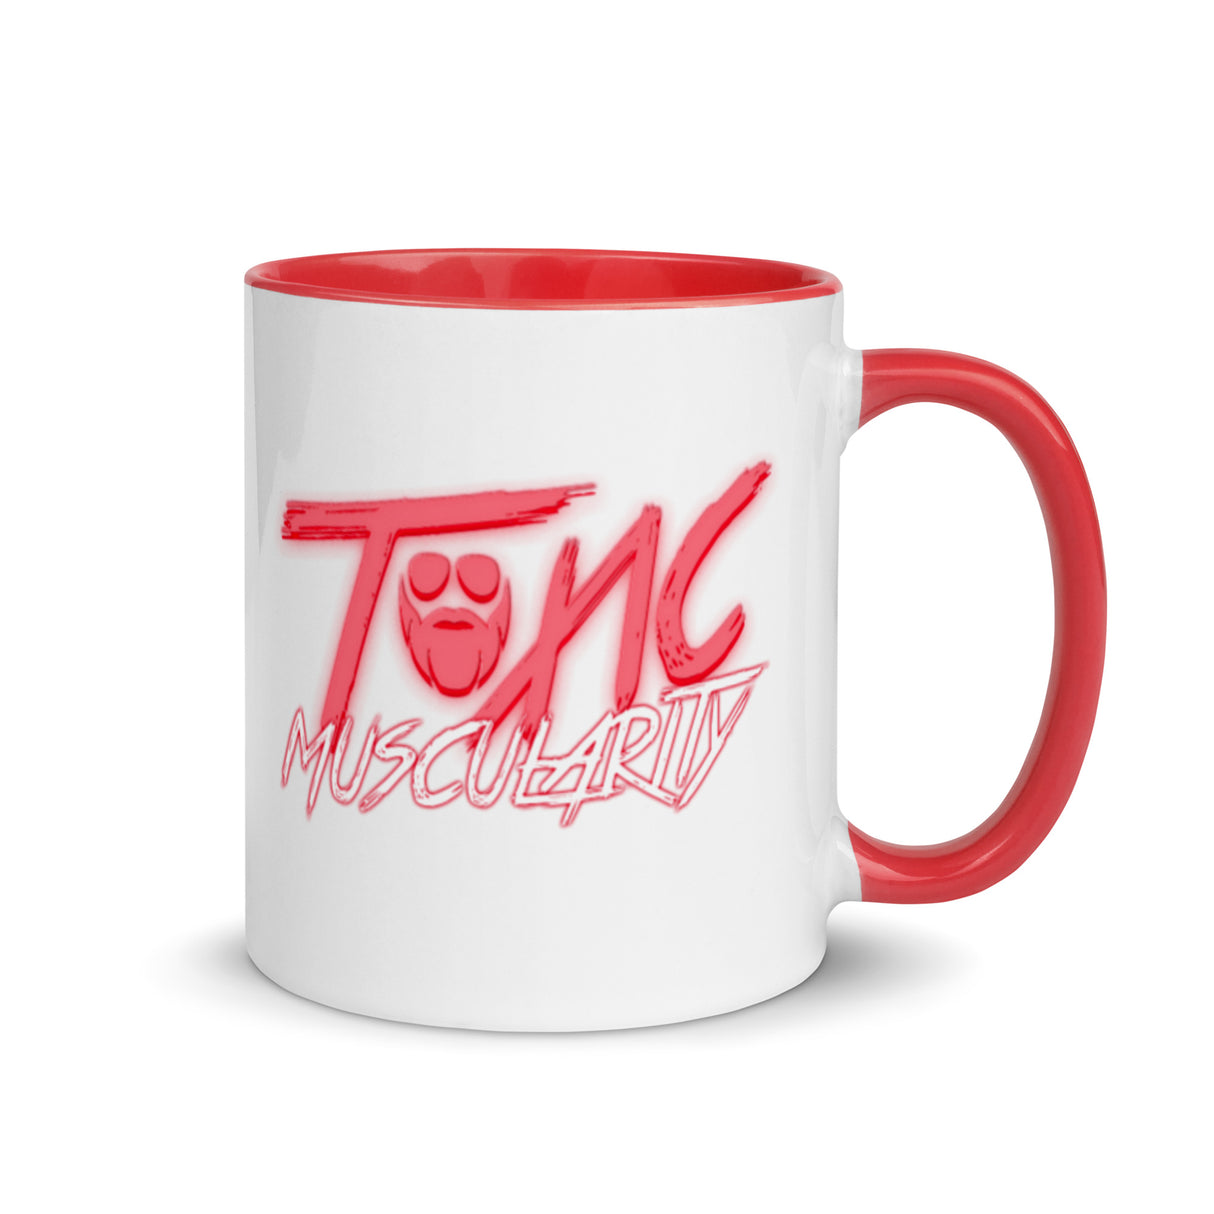 Toxic Muscularity Mug